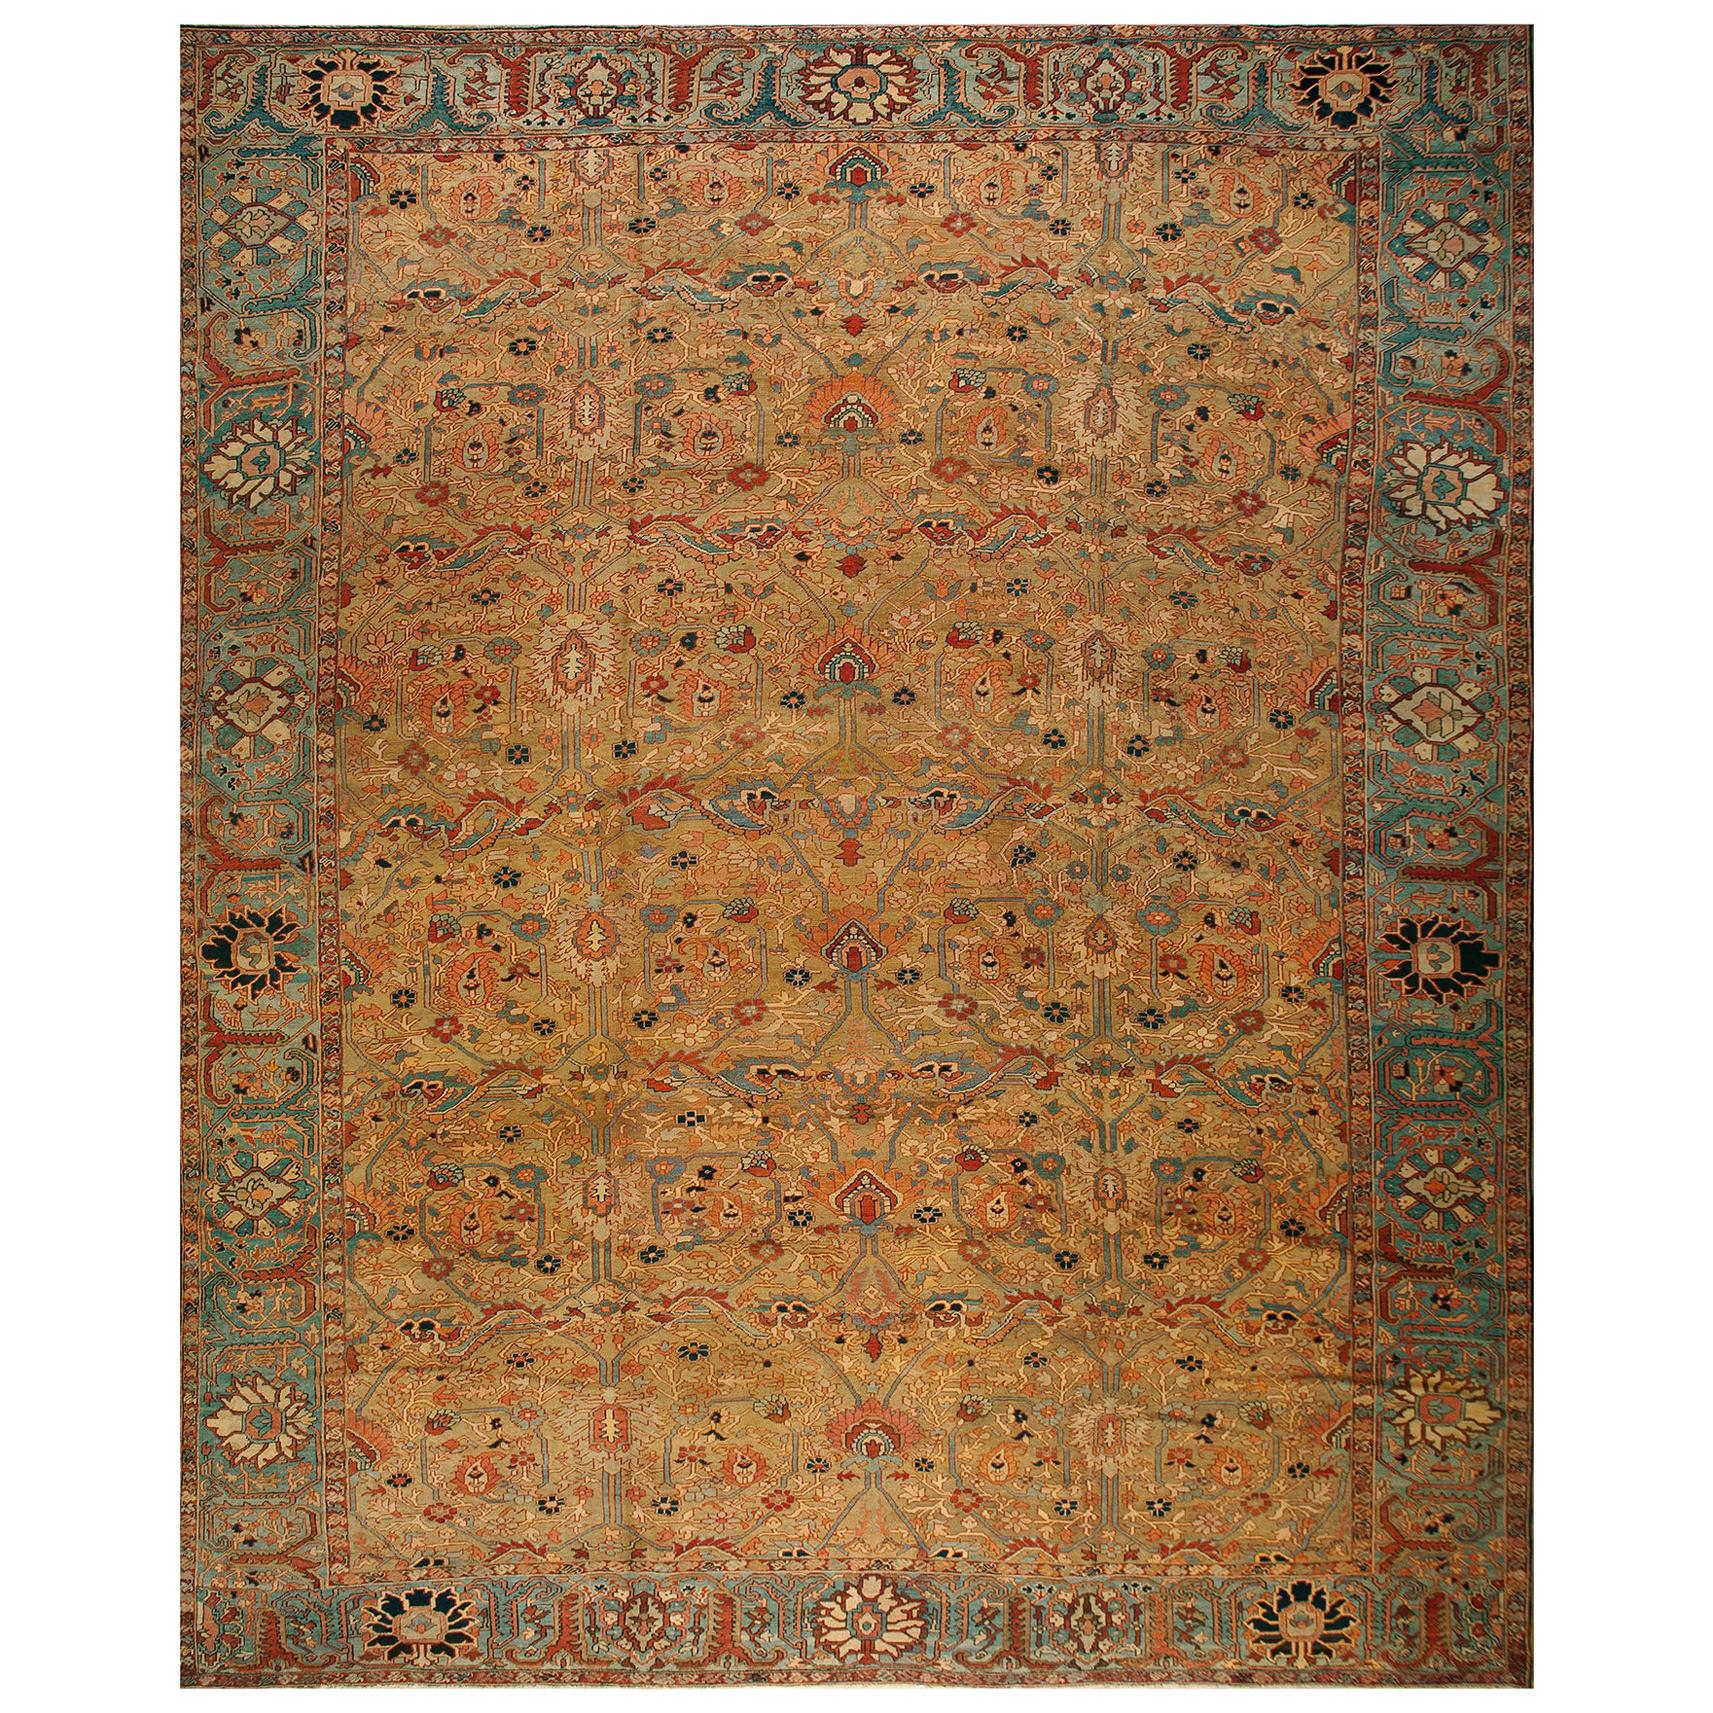 19th Century N.W. Persian Serapi Carpet ( 14'8" x 18'8" - 447 x 570 ) For Sale